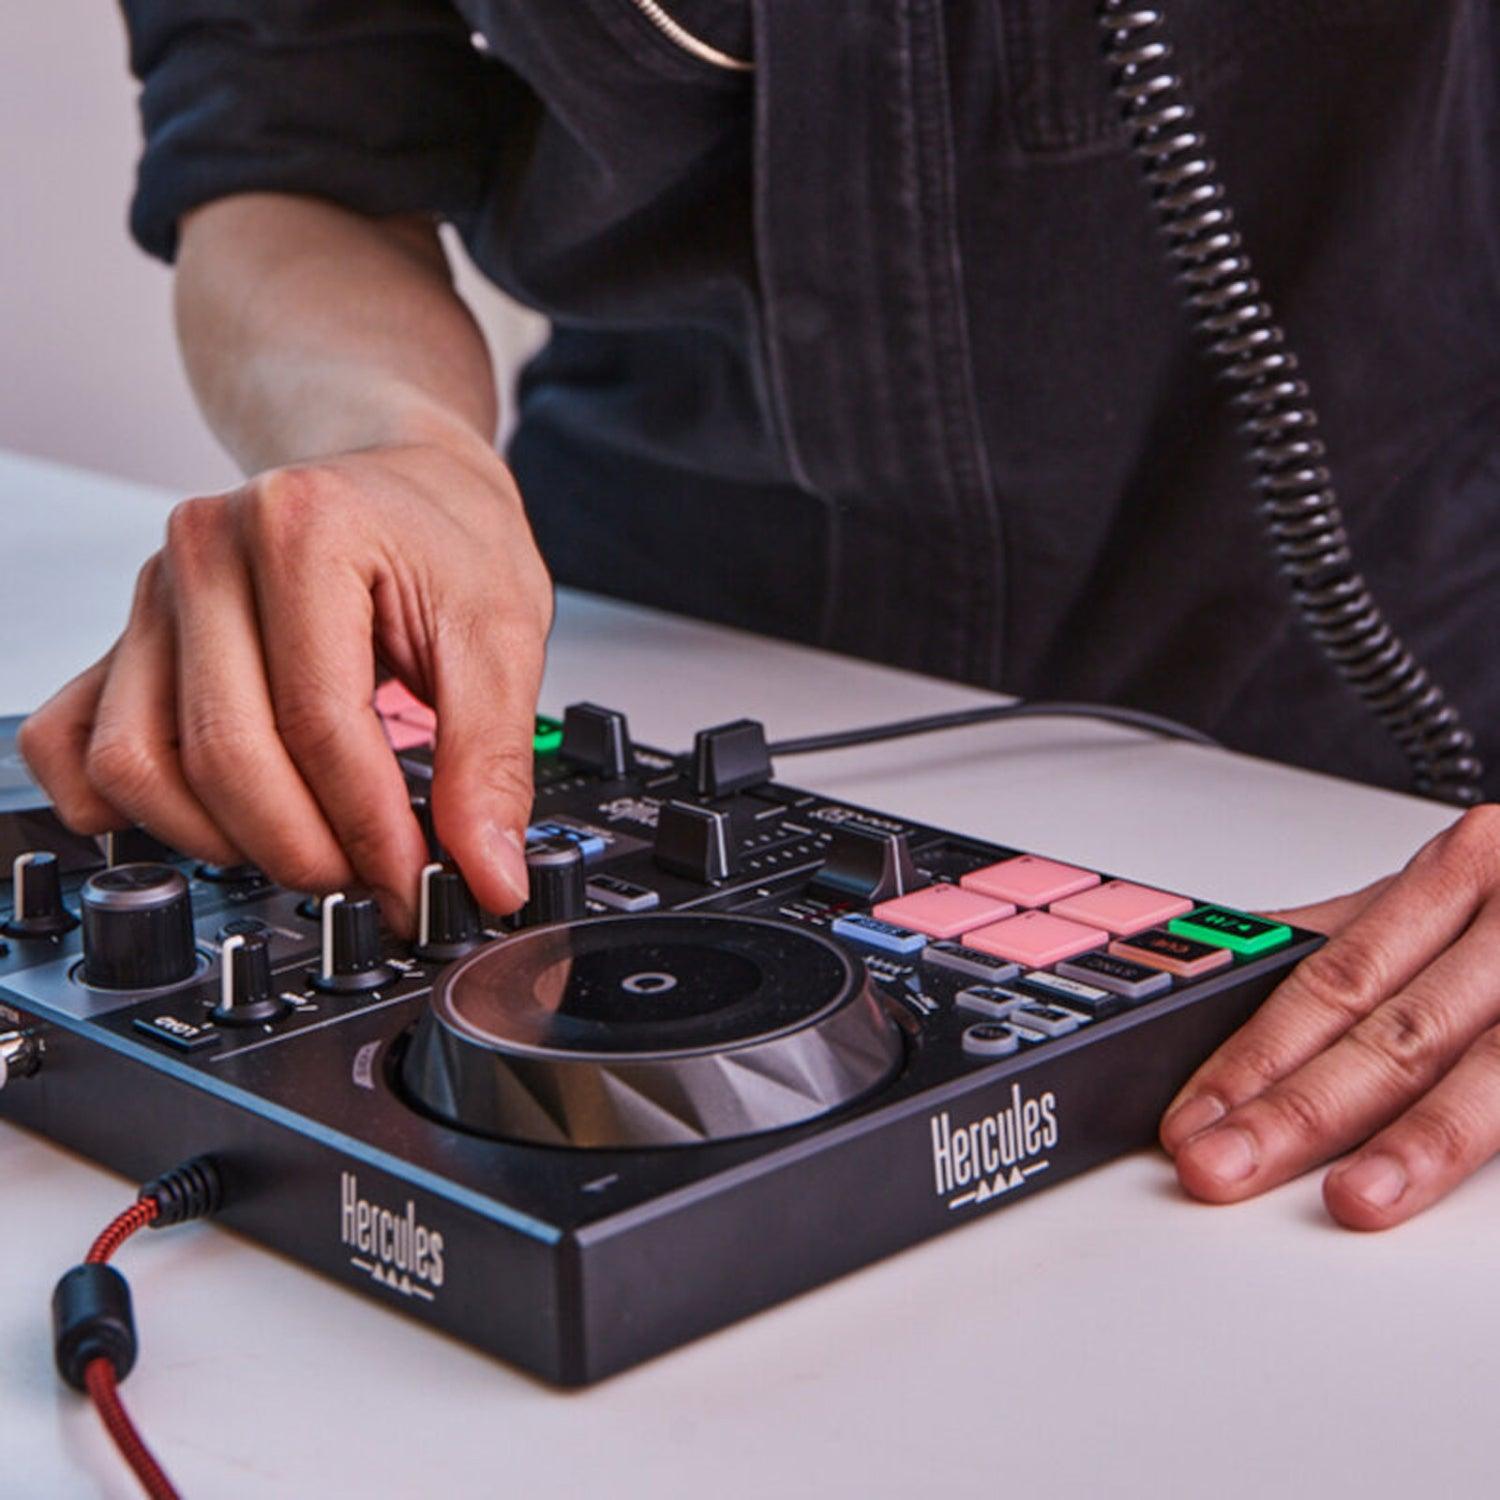 Hercules DJ Learning Kit MK2 With Inpulse 200, Monitors & Headphones - DY Pro Audio